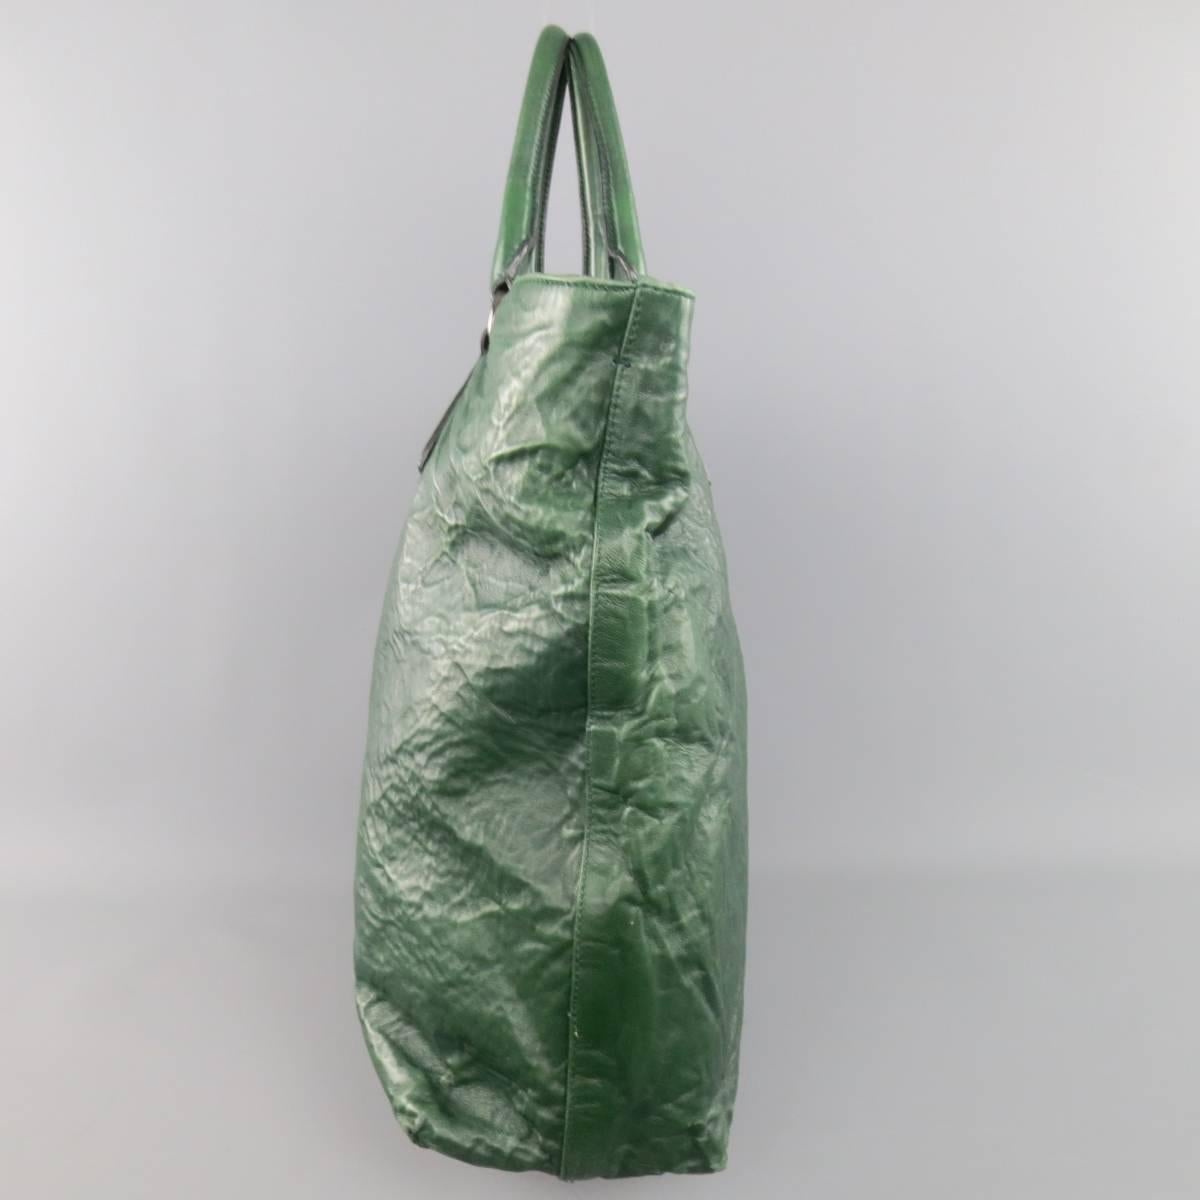 Gray PRADA Green Textured Leather Tote Handbag